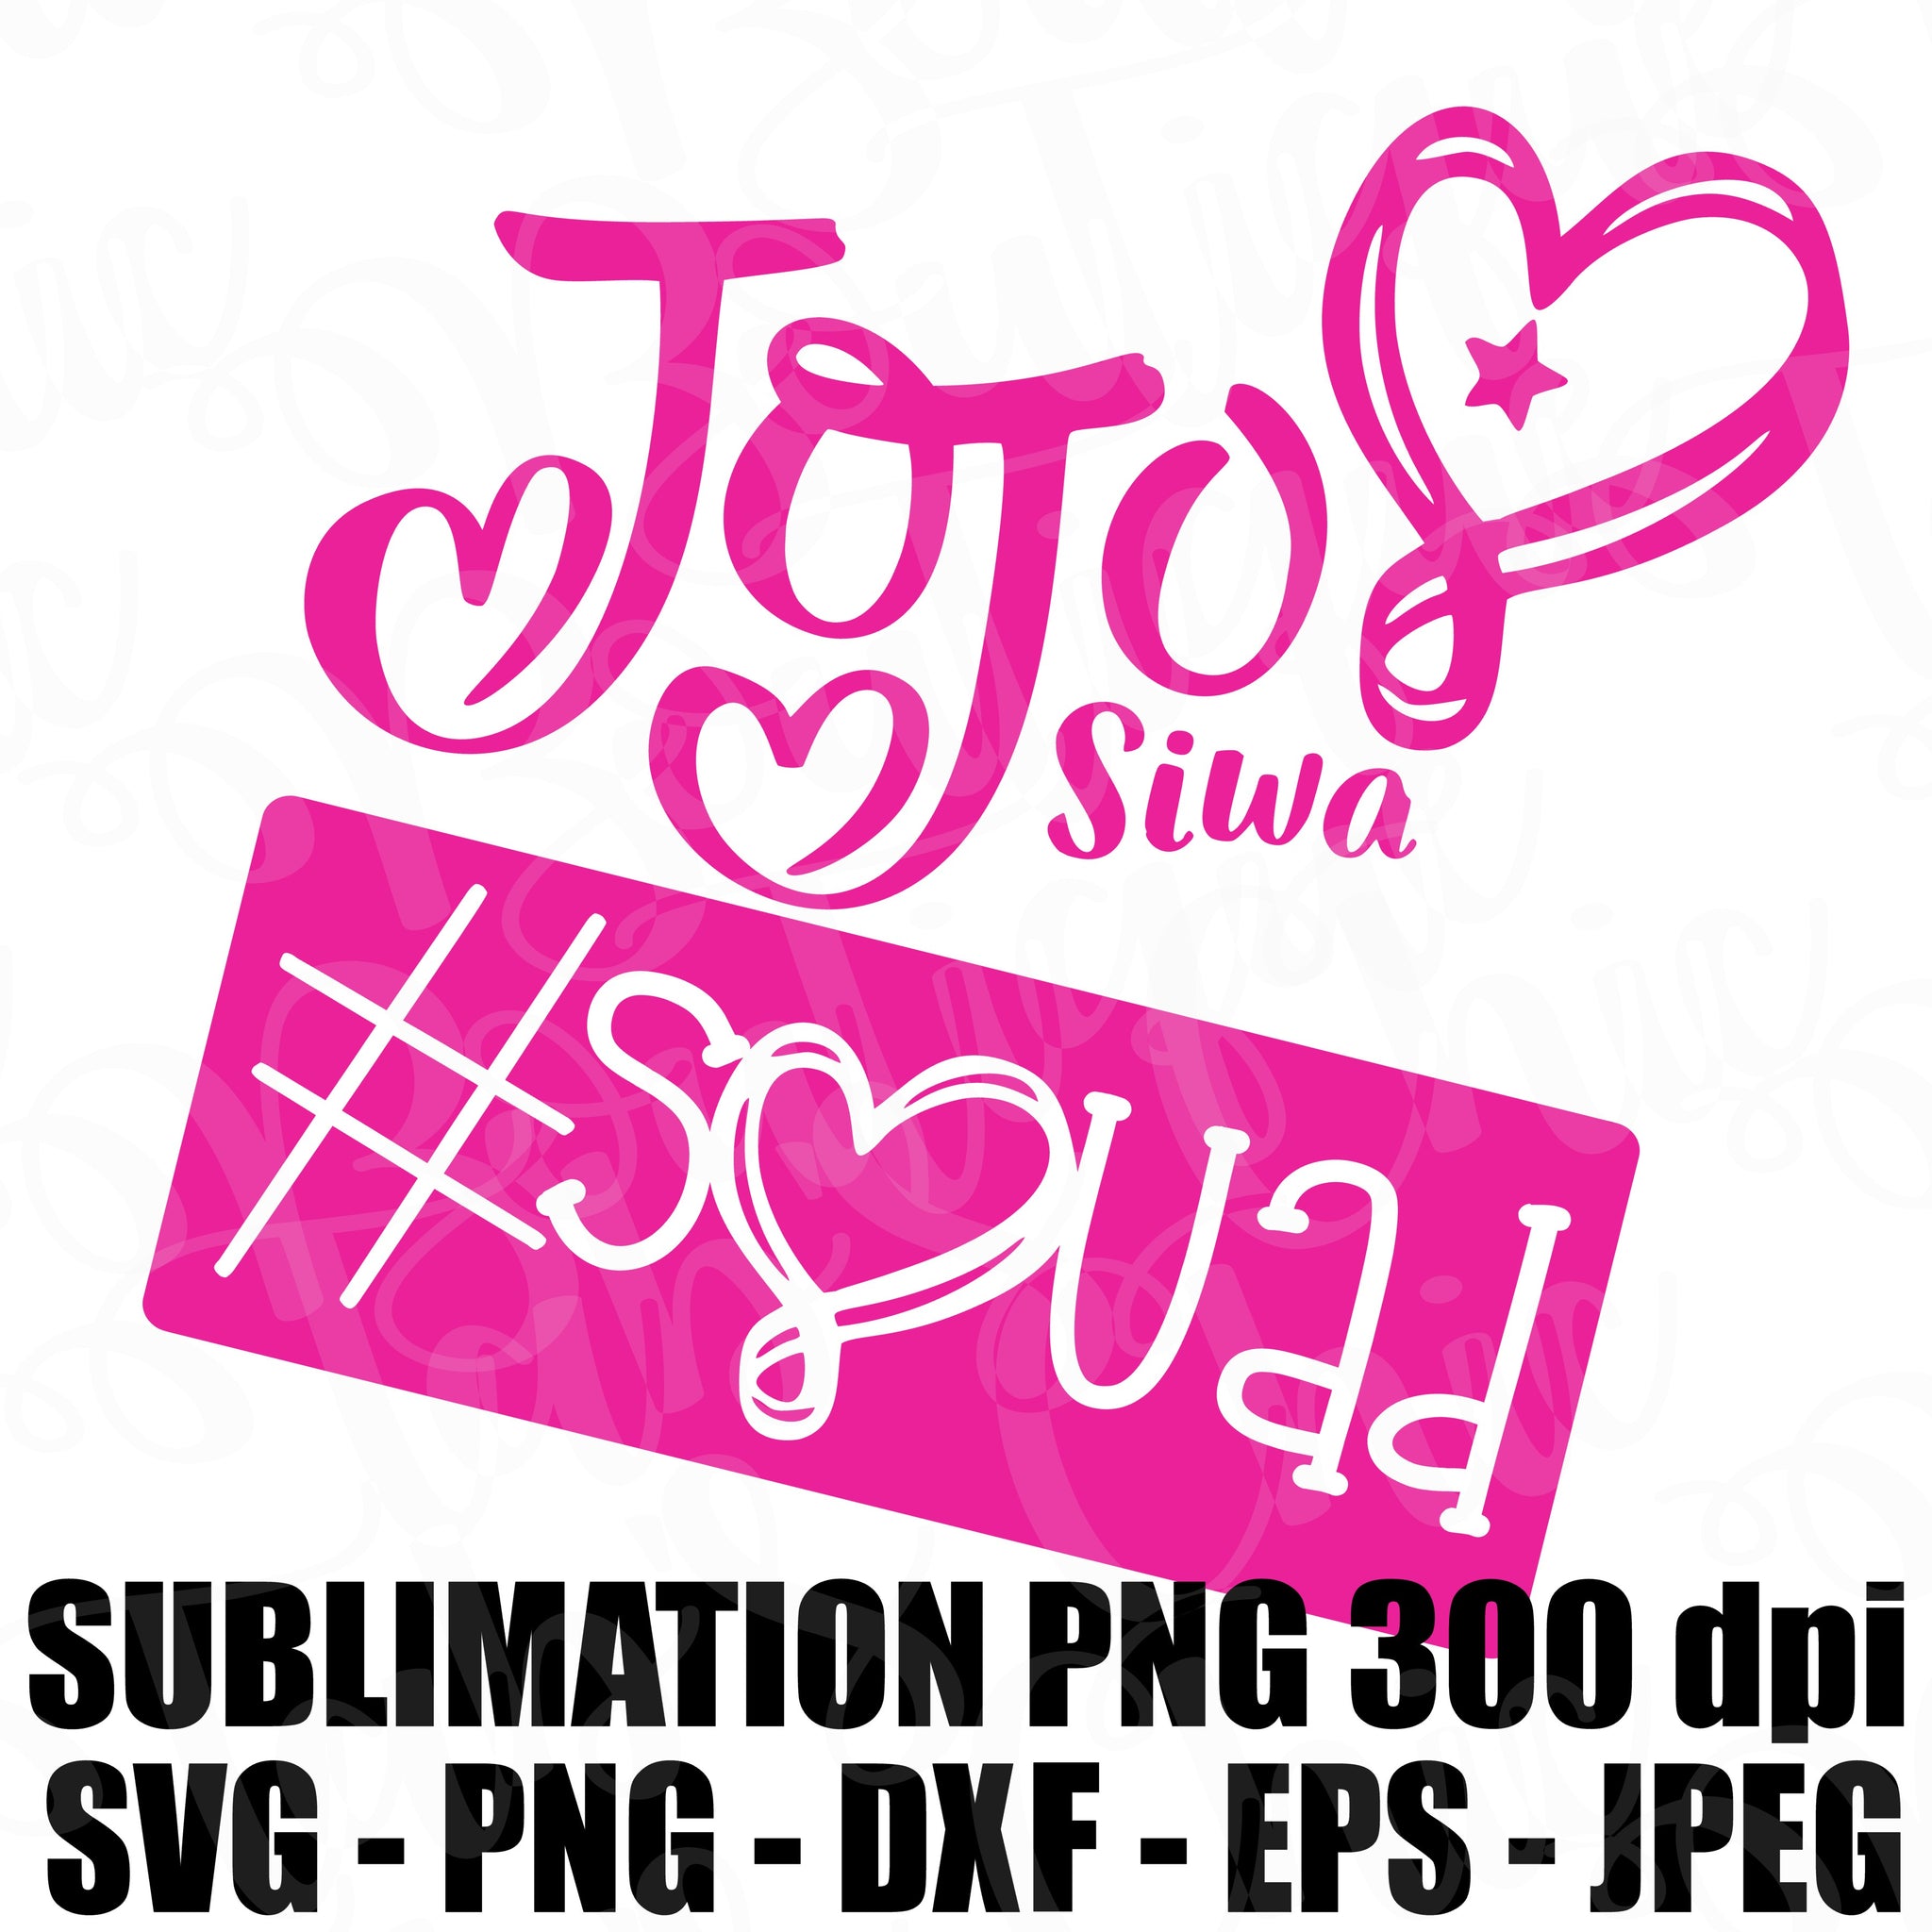 Download Jojo Siwa Squad Svg Jpeg High Def 300 Dpi Png Eps Dxf Topper Sublimat Tab S Chic Boutique